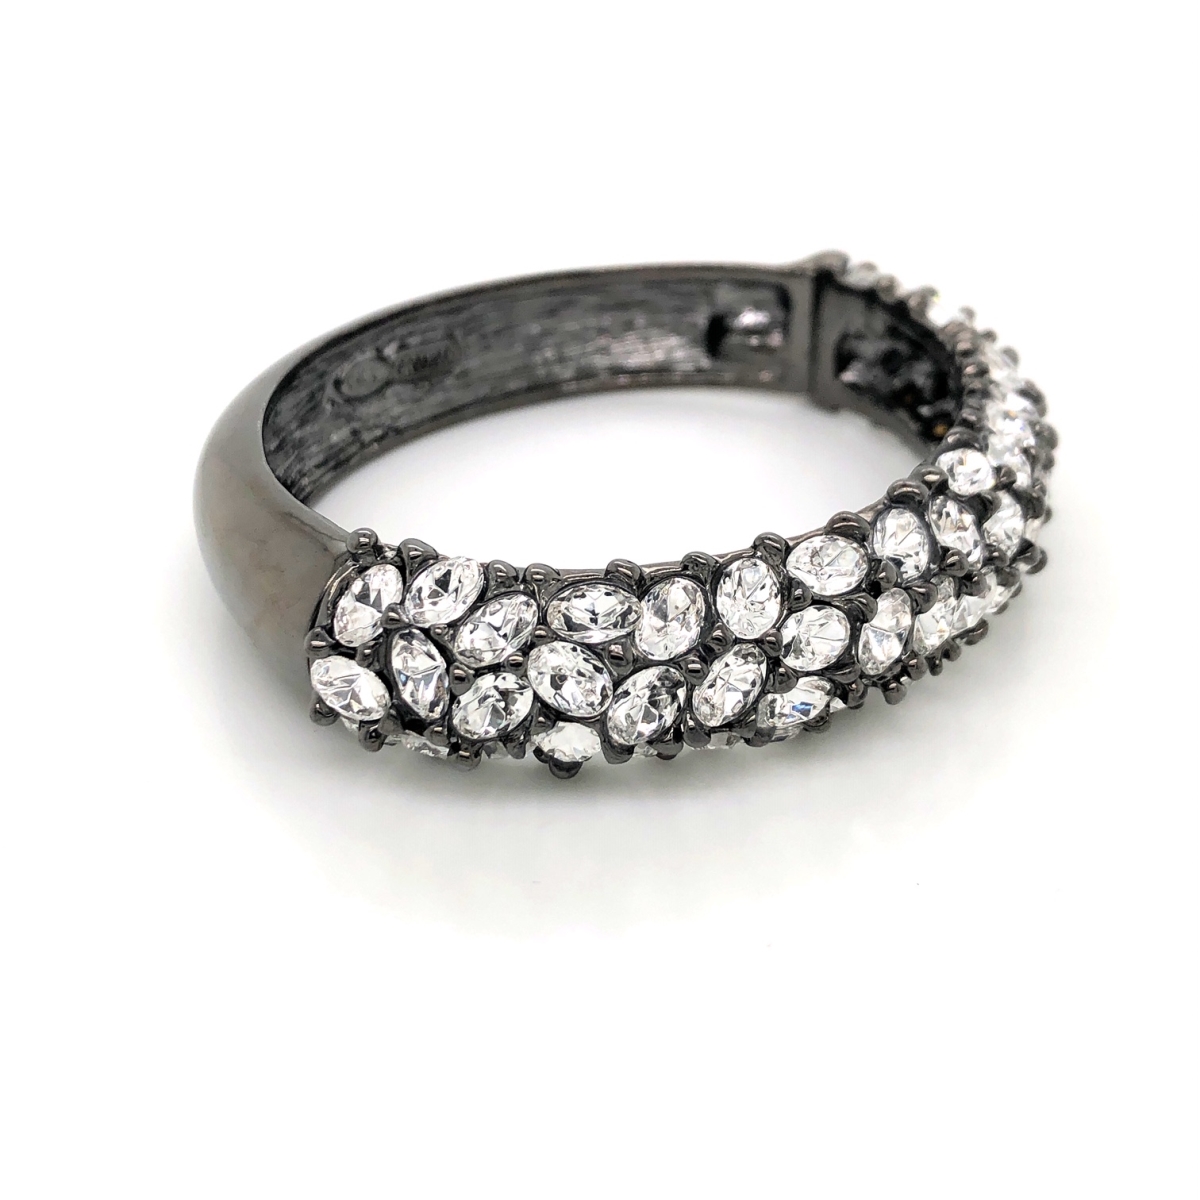 Q3603ok-clear Fashionable Oval Crystal Studded Bangle Bracelet - Clear